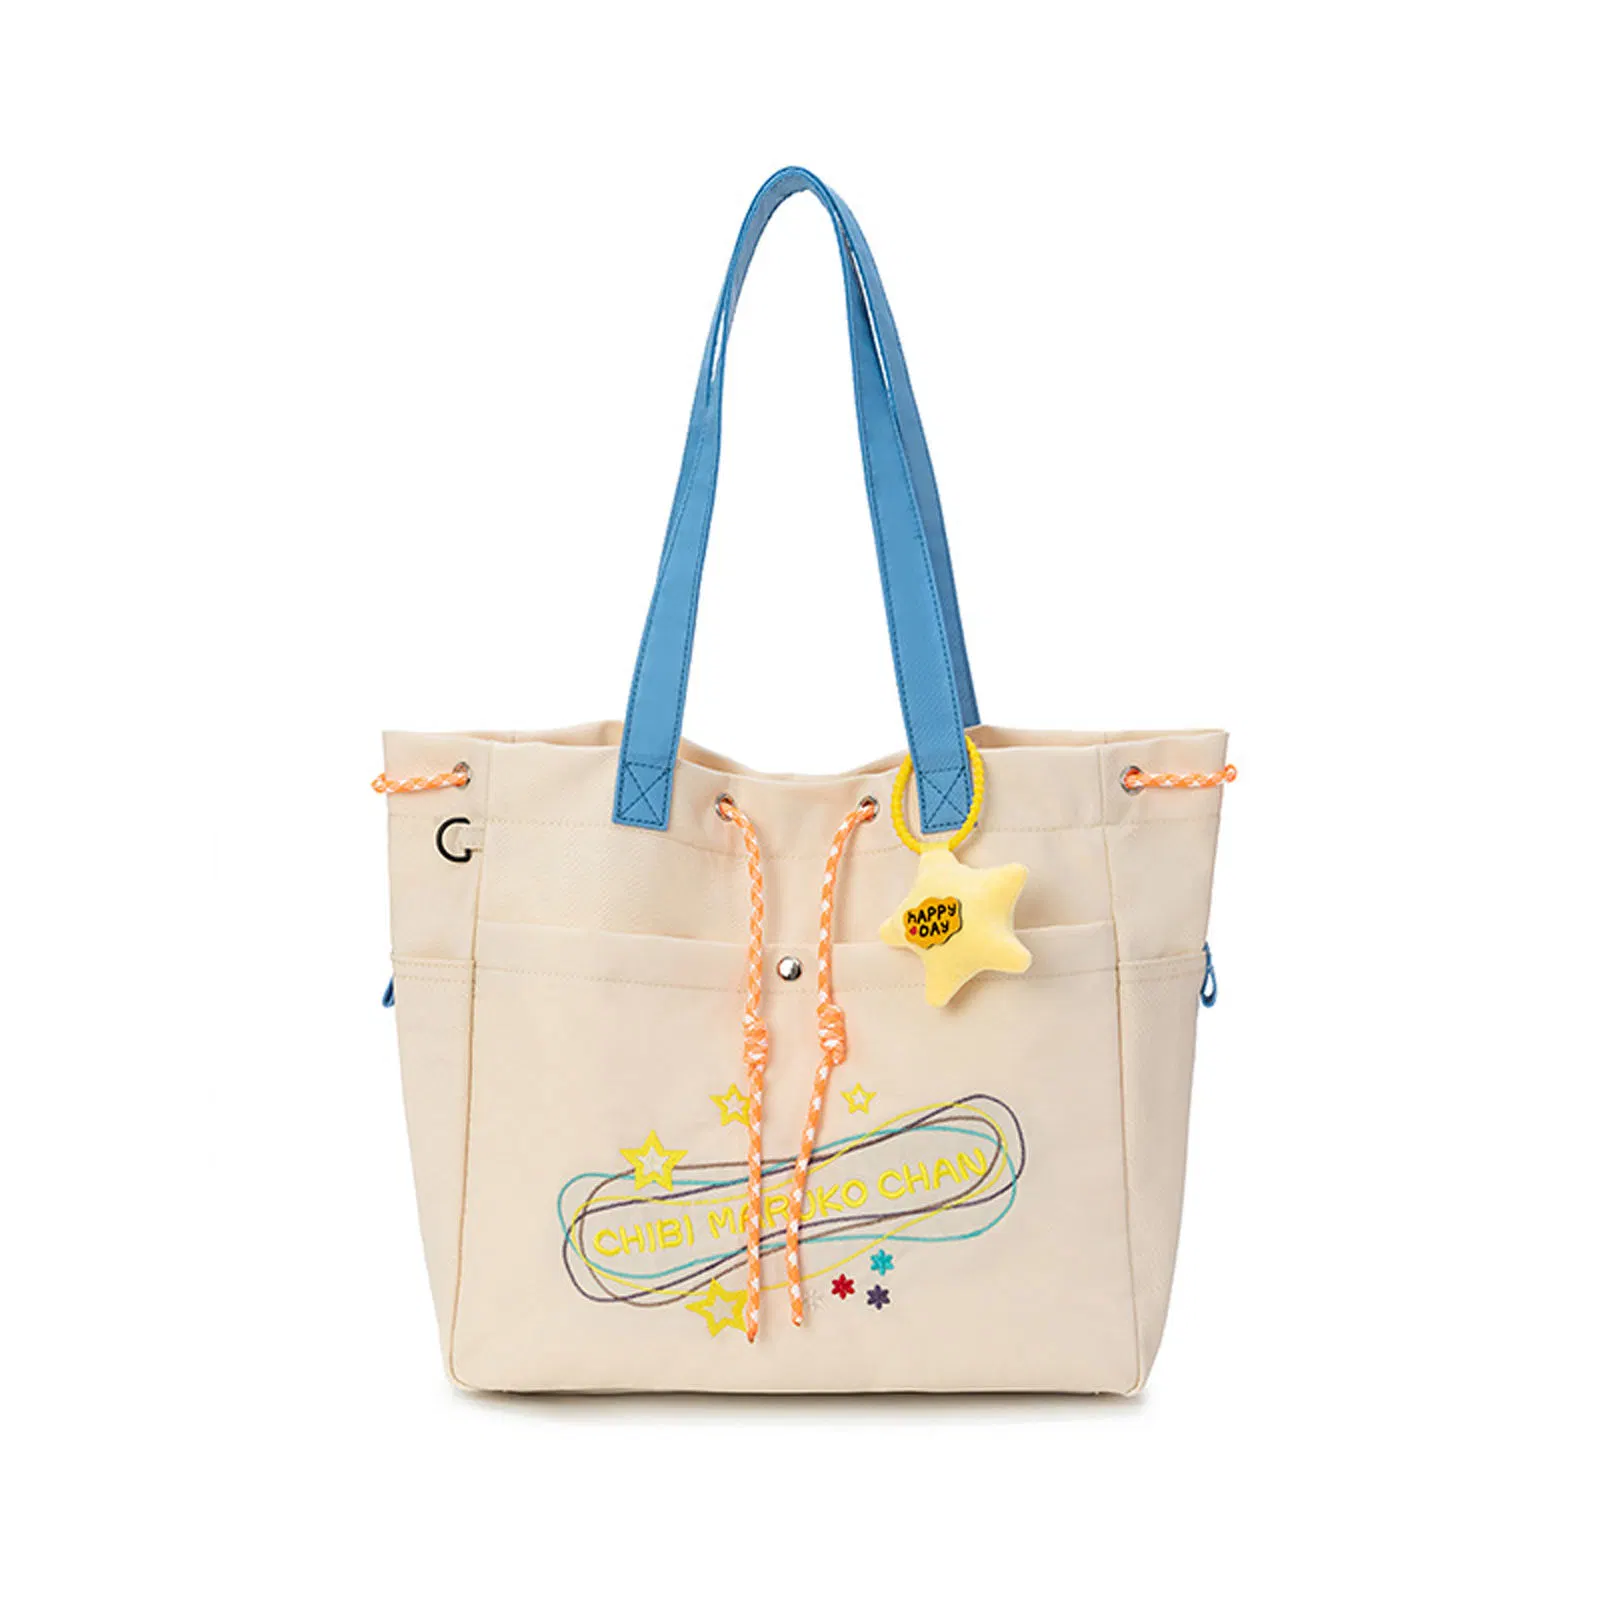 Hot Sale New Fashion Cute Tote Bag for Women Nylon High Quality Shoulder Bags Girls Handbag Bolsa De Cuero